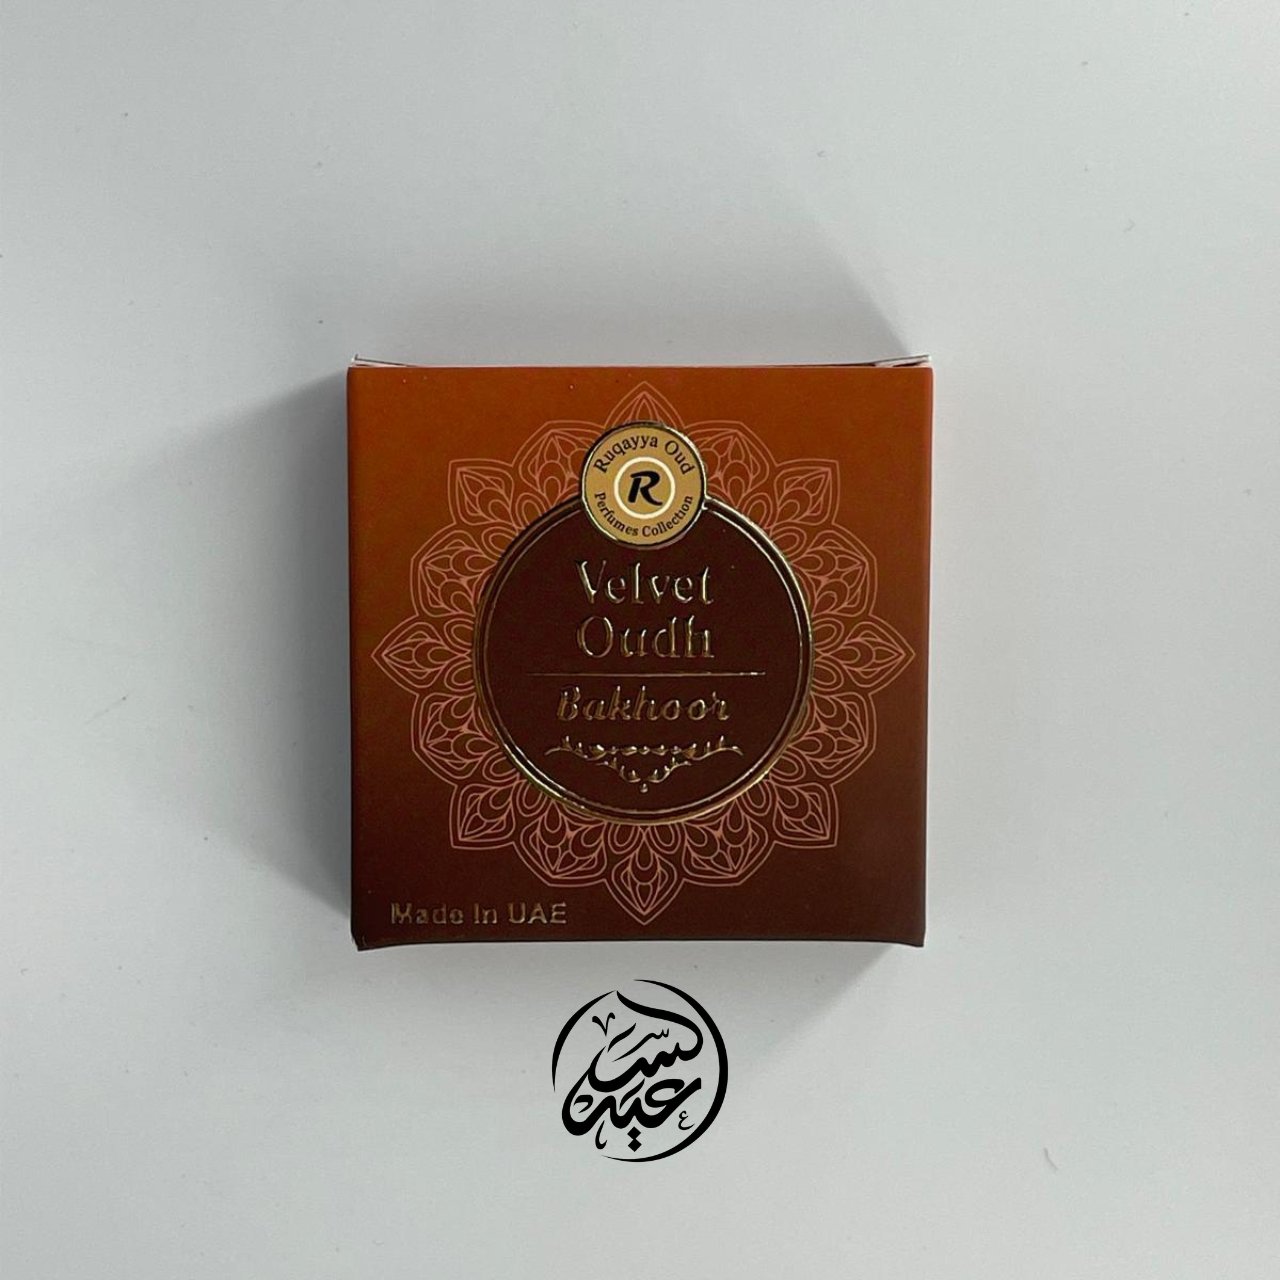 Emirati incense البخور الإماراتي - بهارات و عطارة السعيد